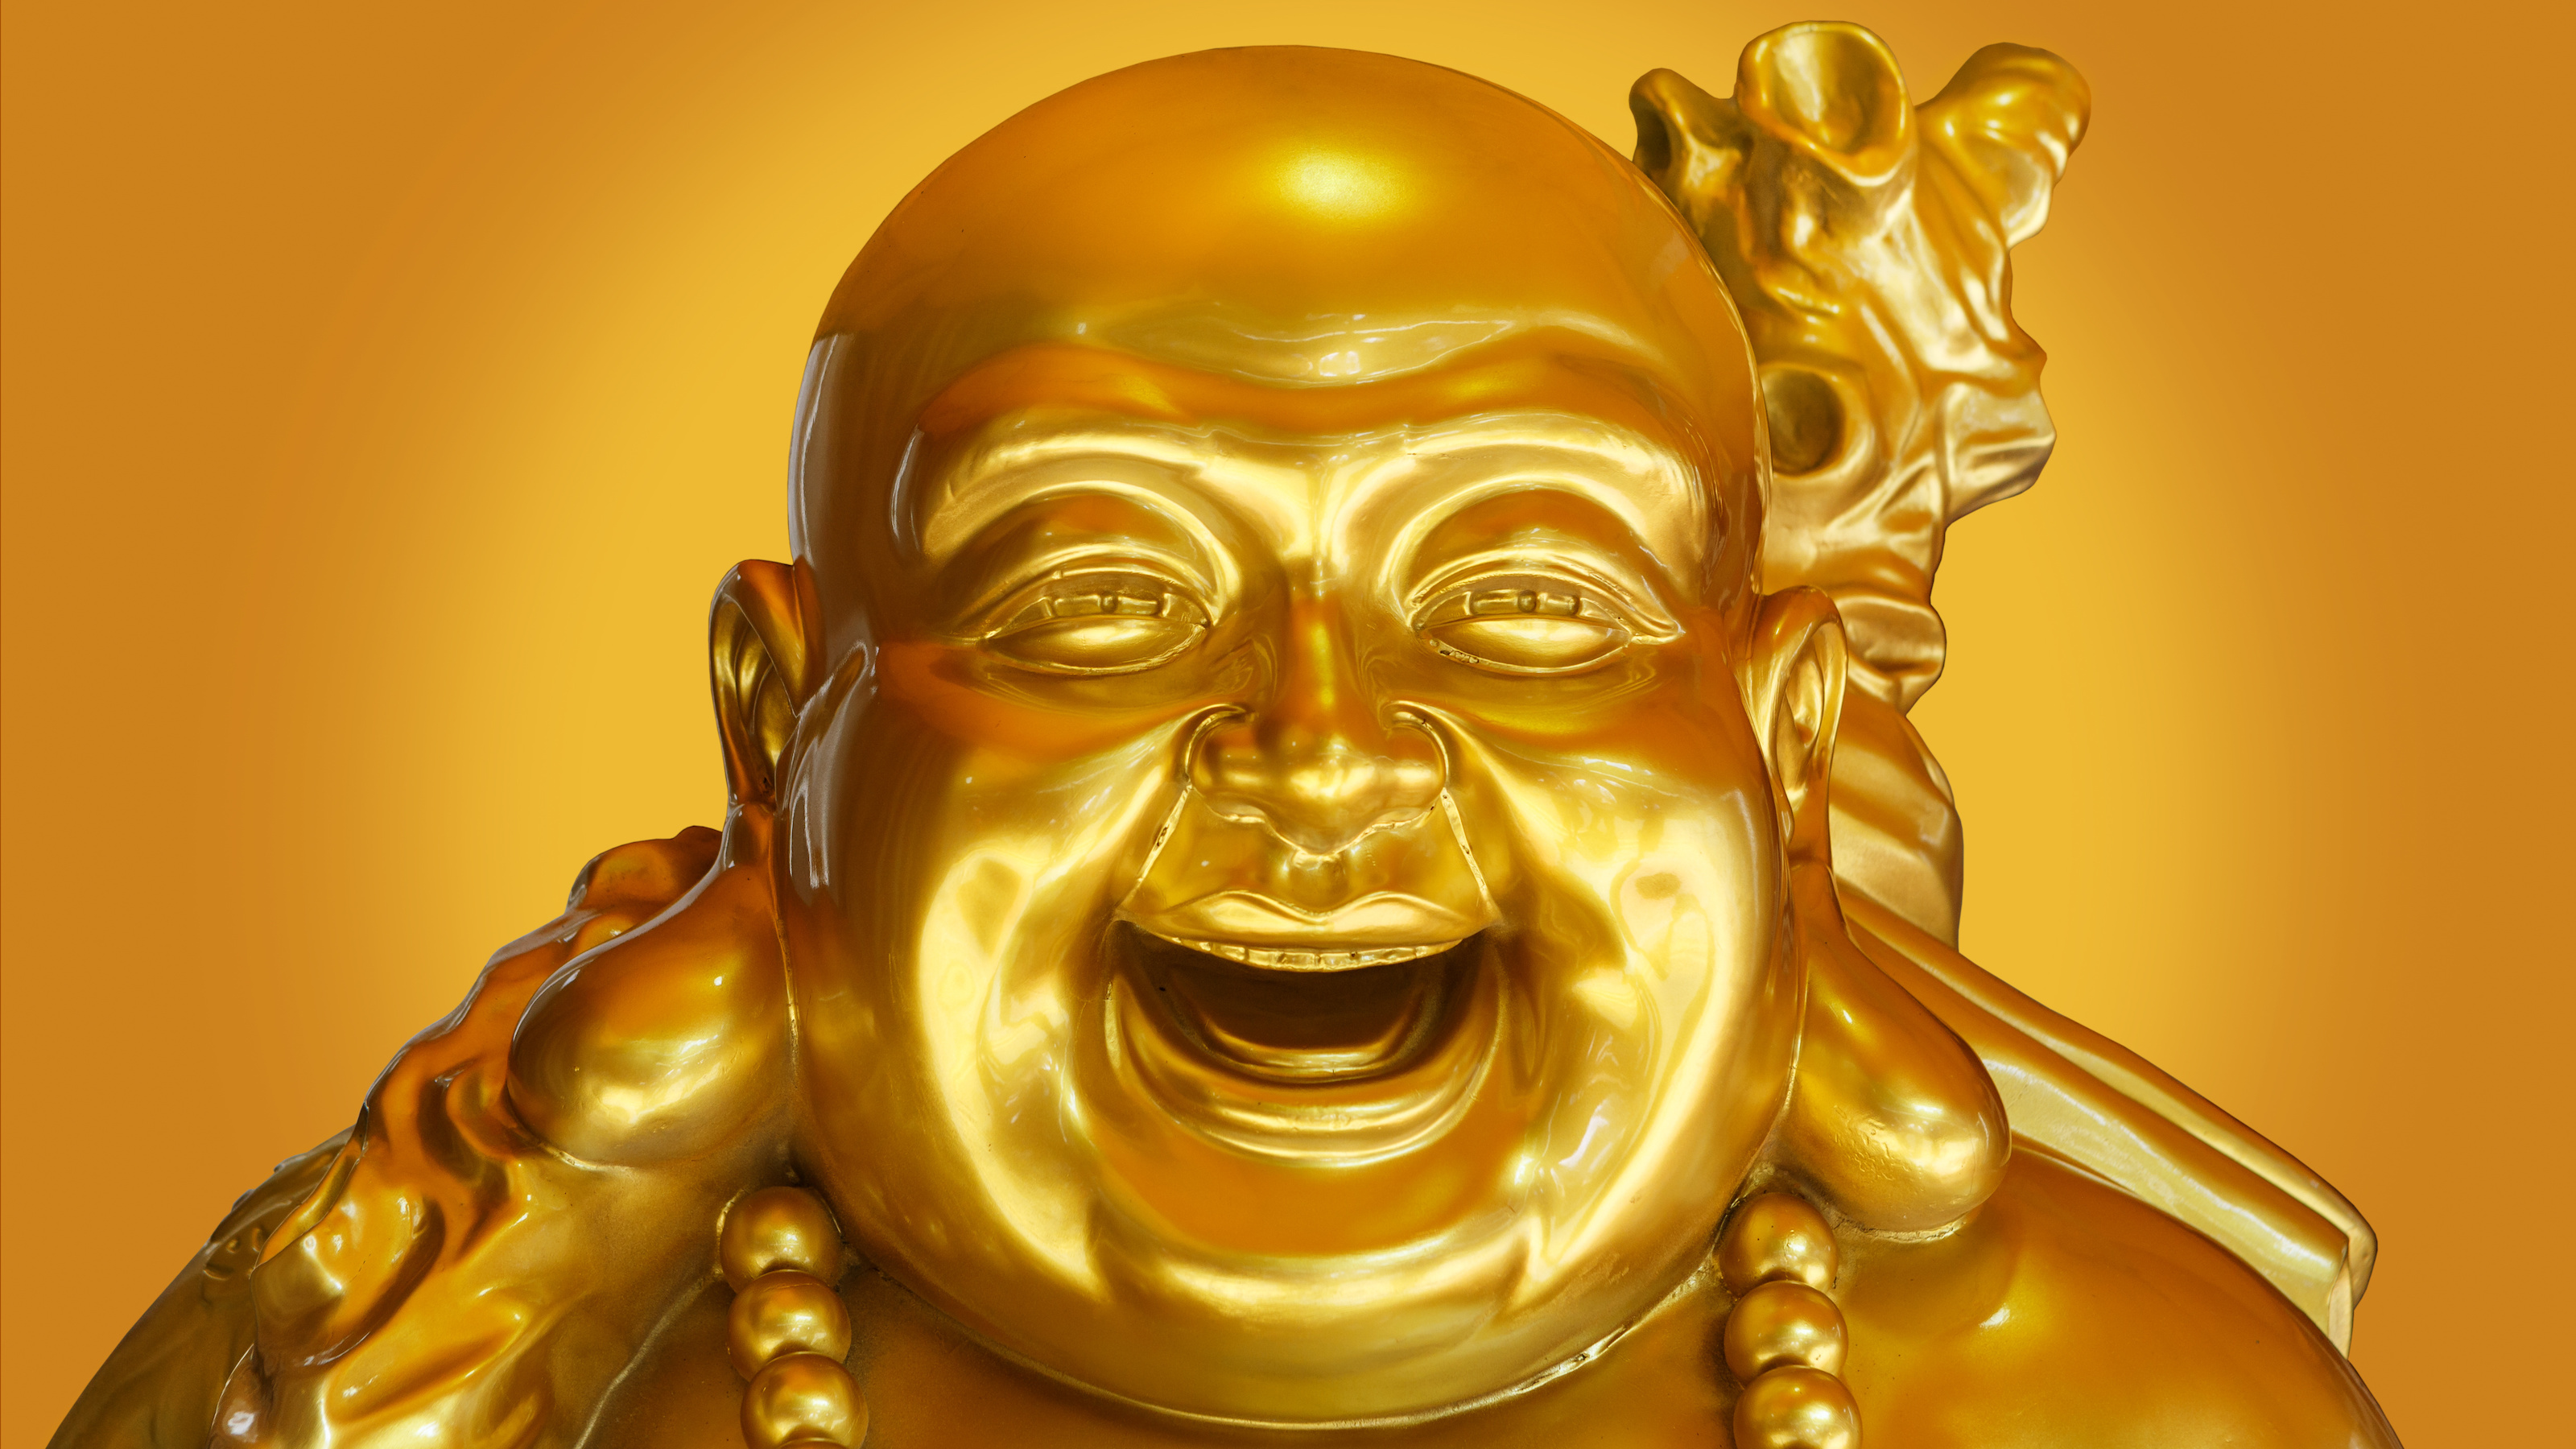 Laughing golden Buddha statue